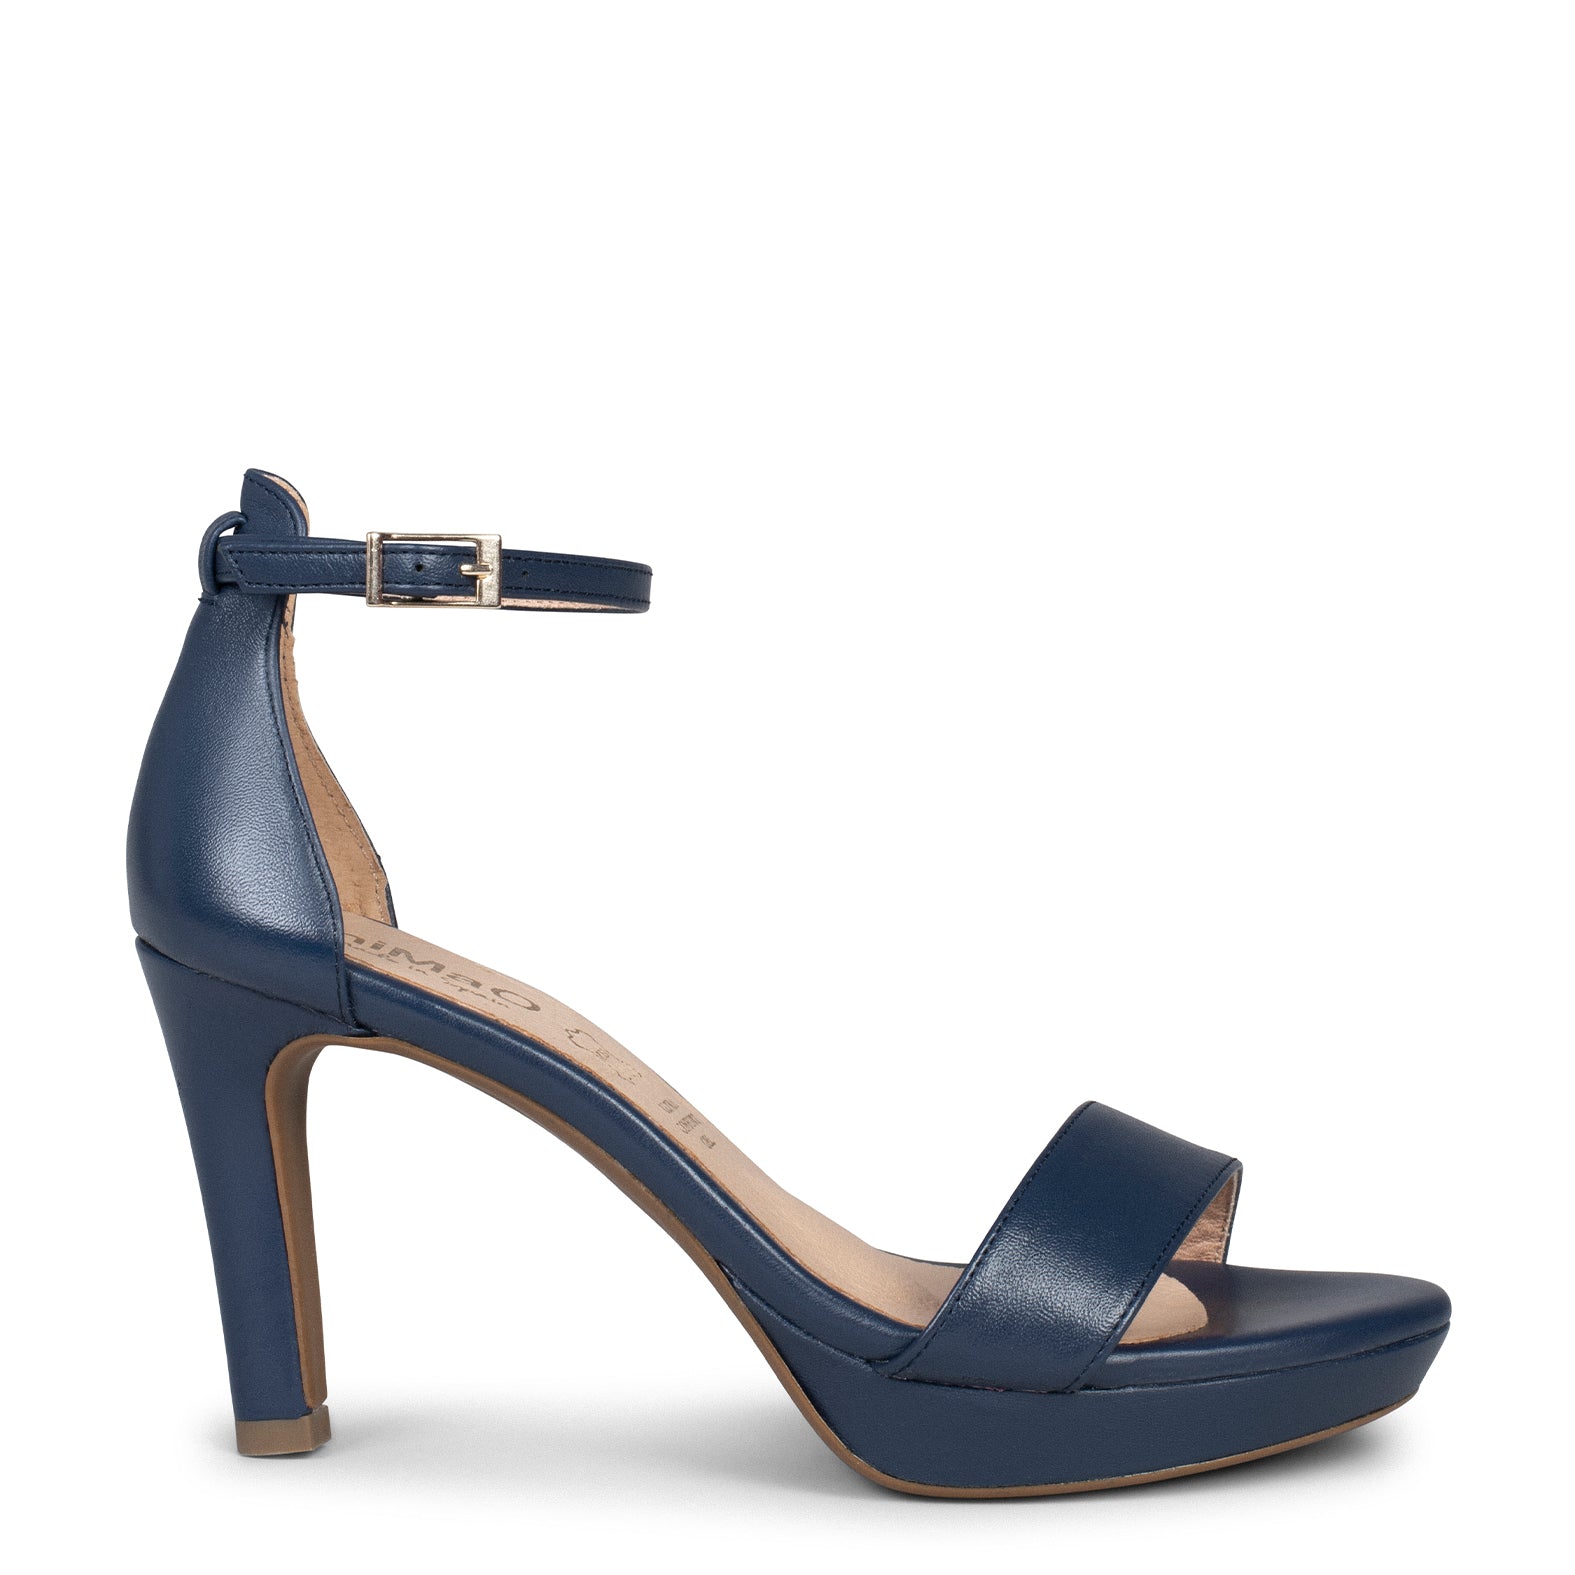 PARTY – NAVY high-heeled platform sandals